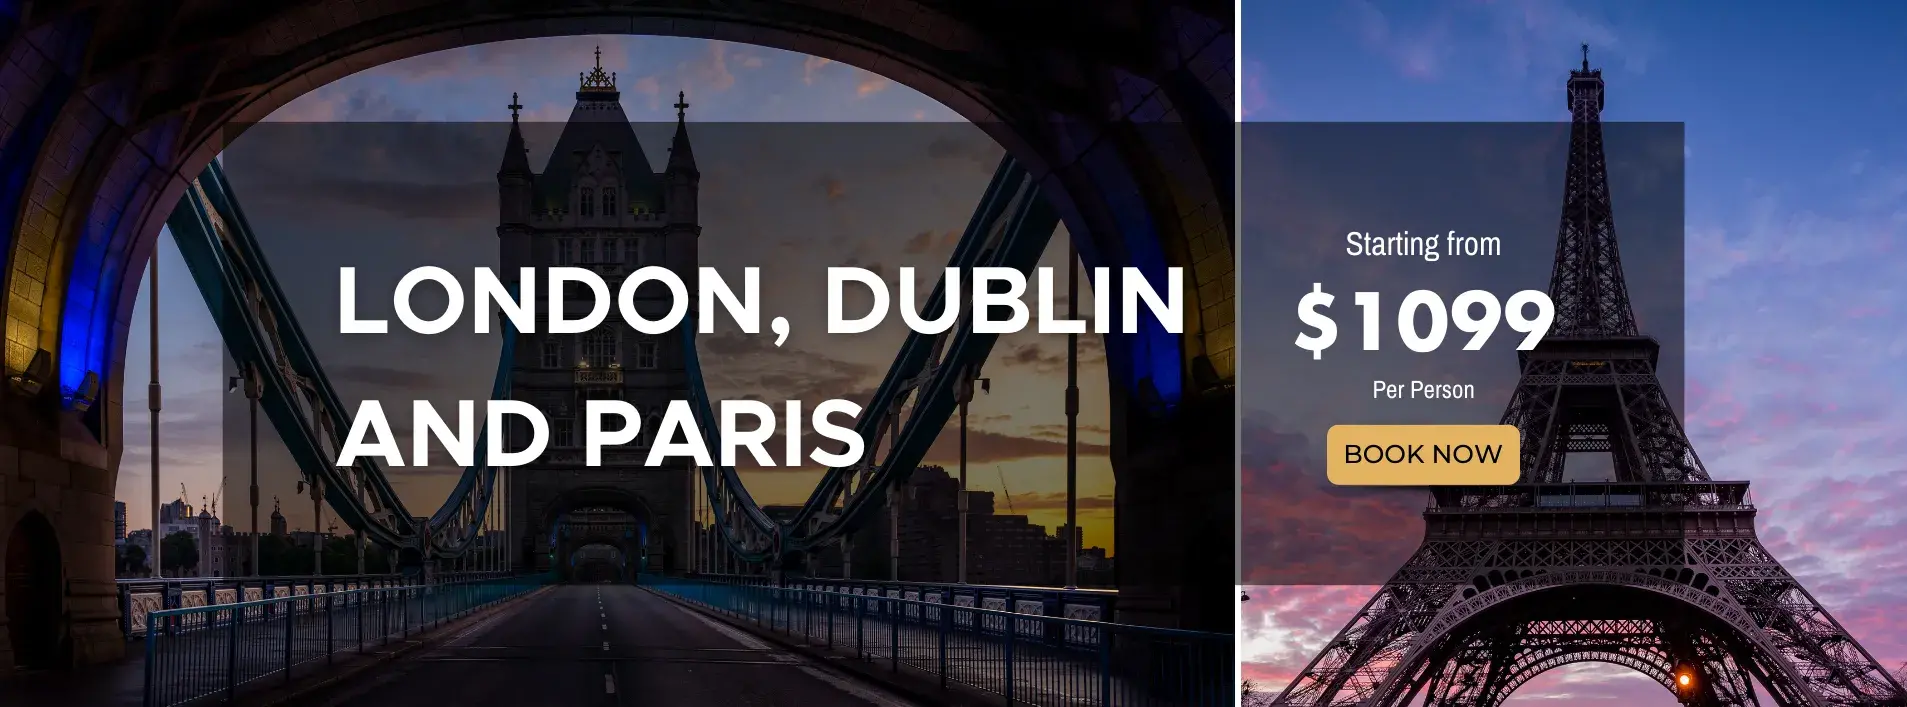 London, Dublin, Paris